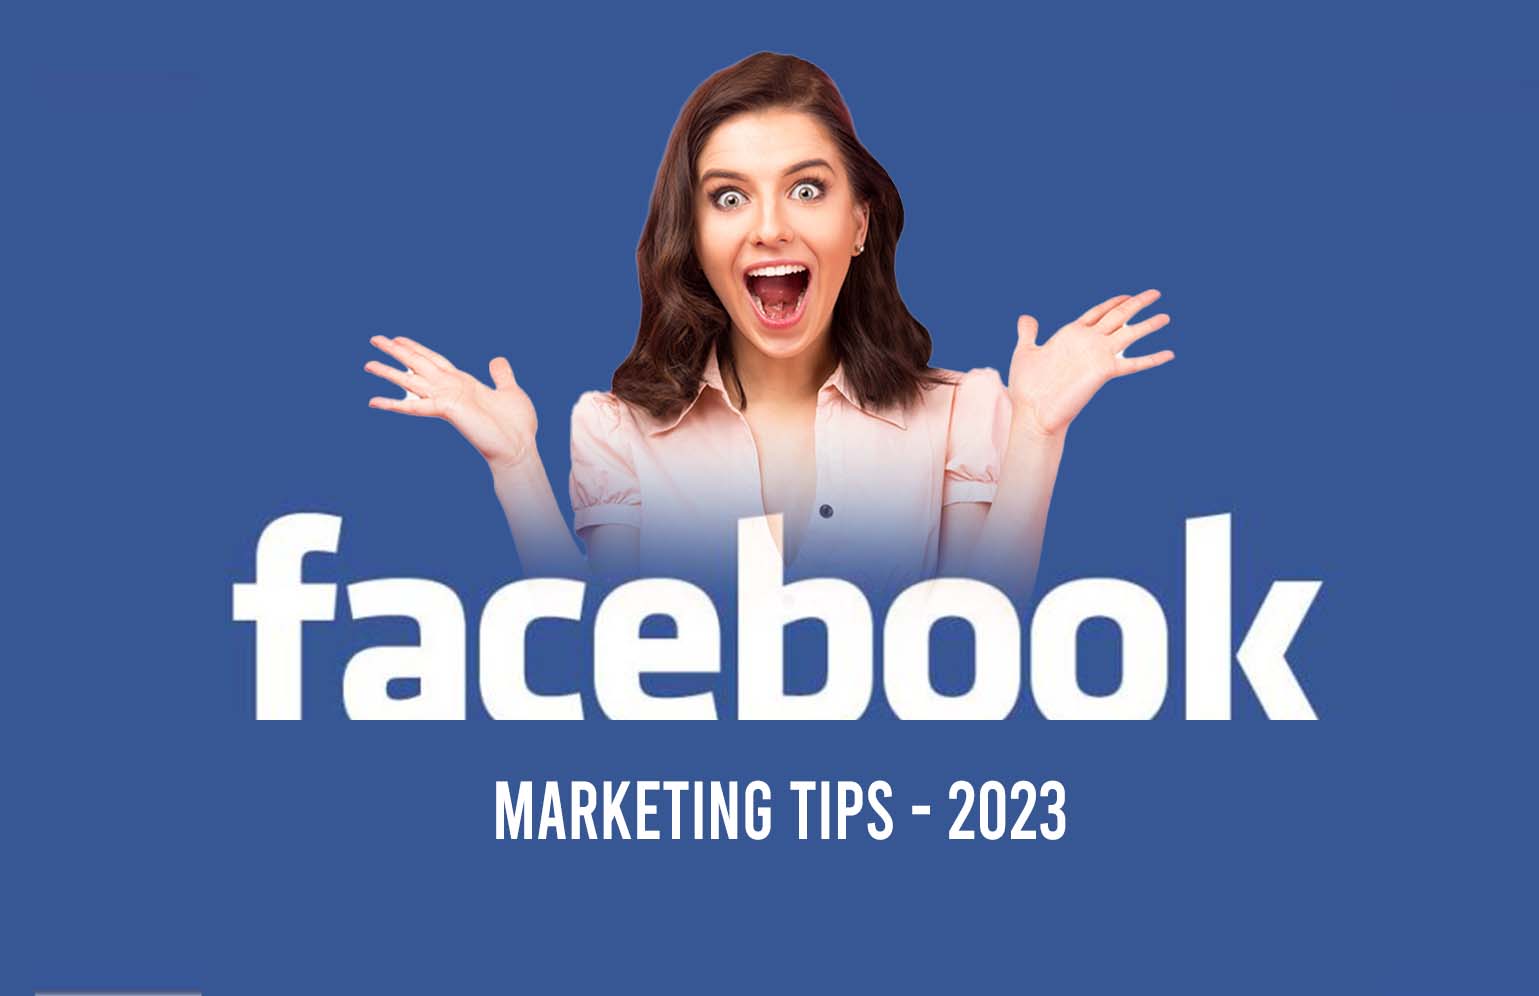 Facebook Marketing Tips for 2023